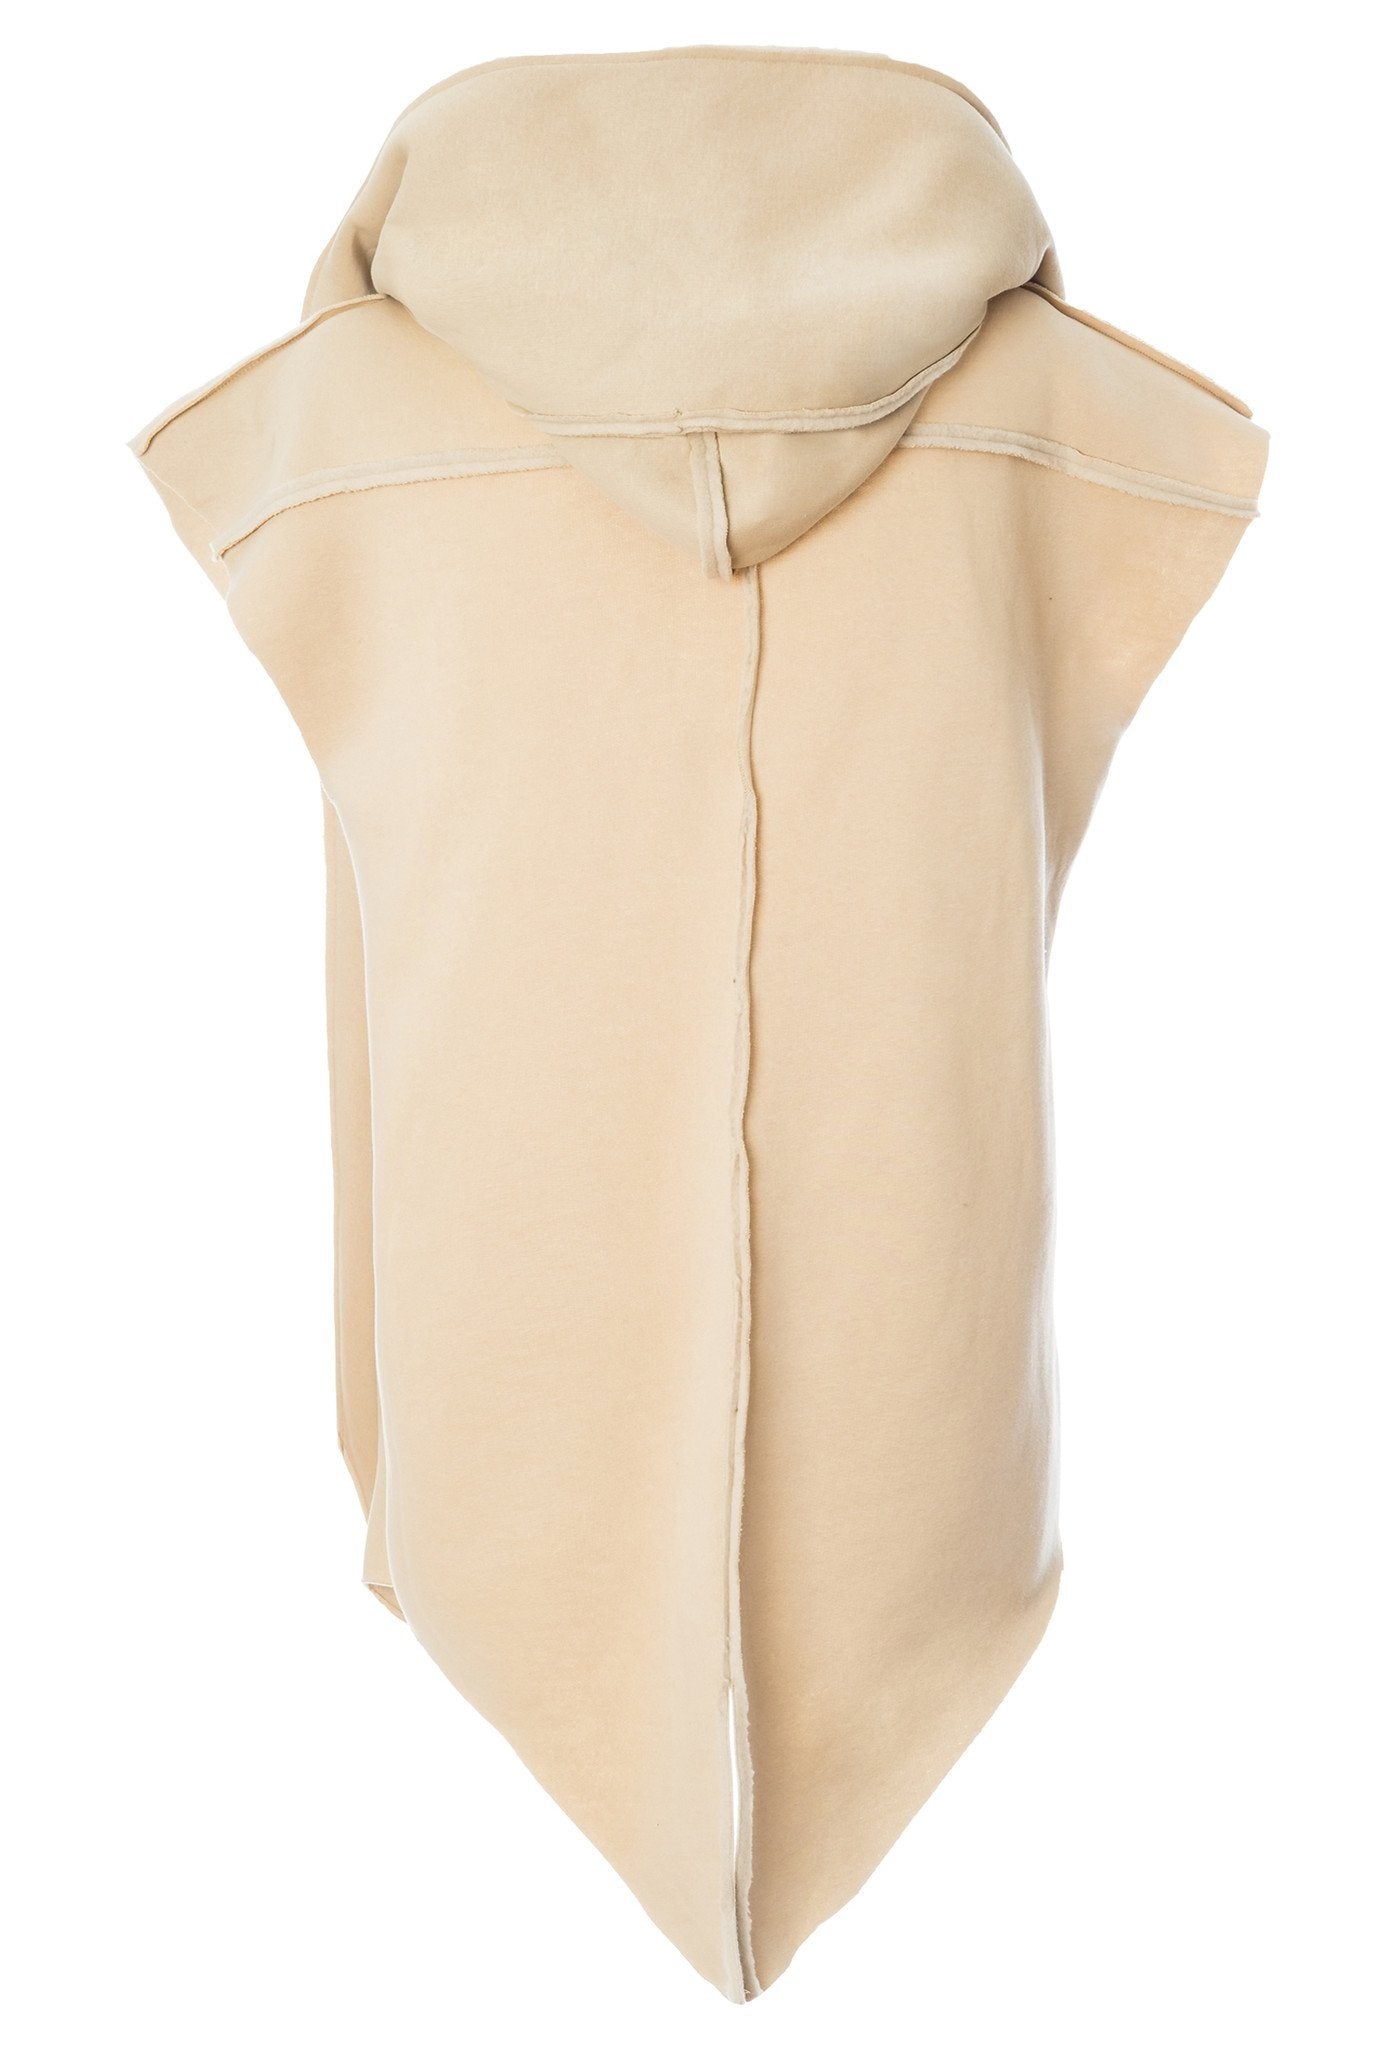 TheG cotton handmade designer drop sleeve vest rattan